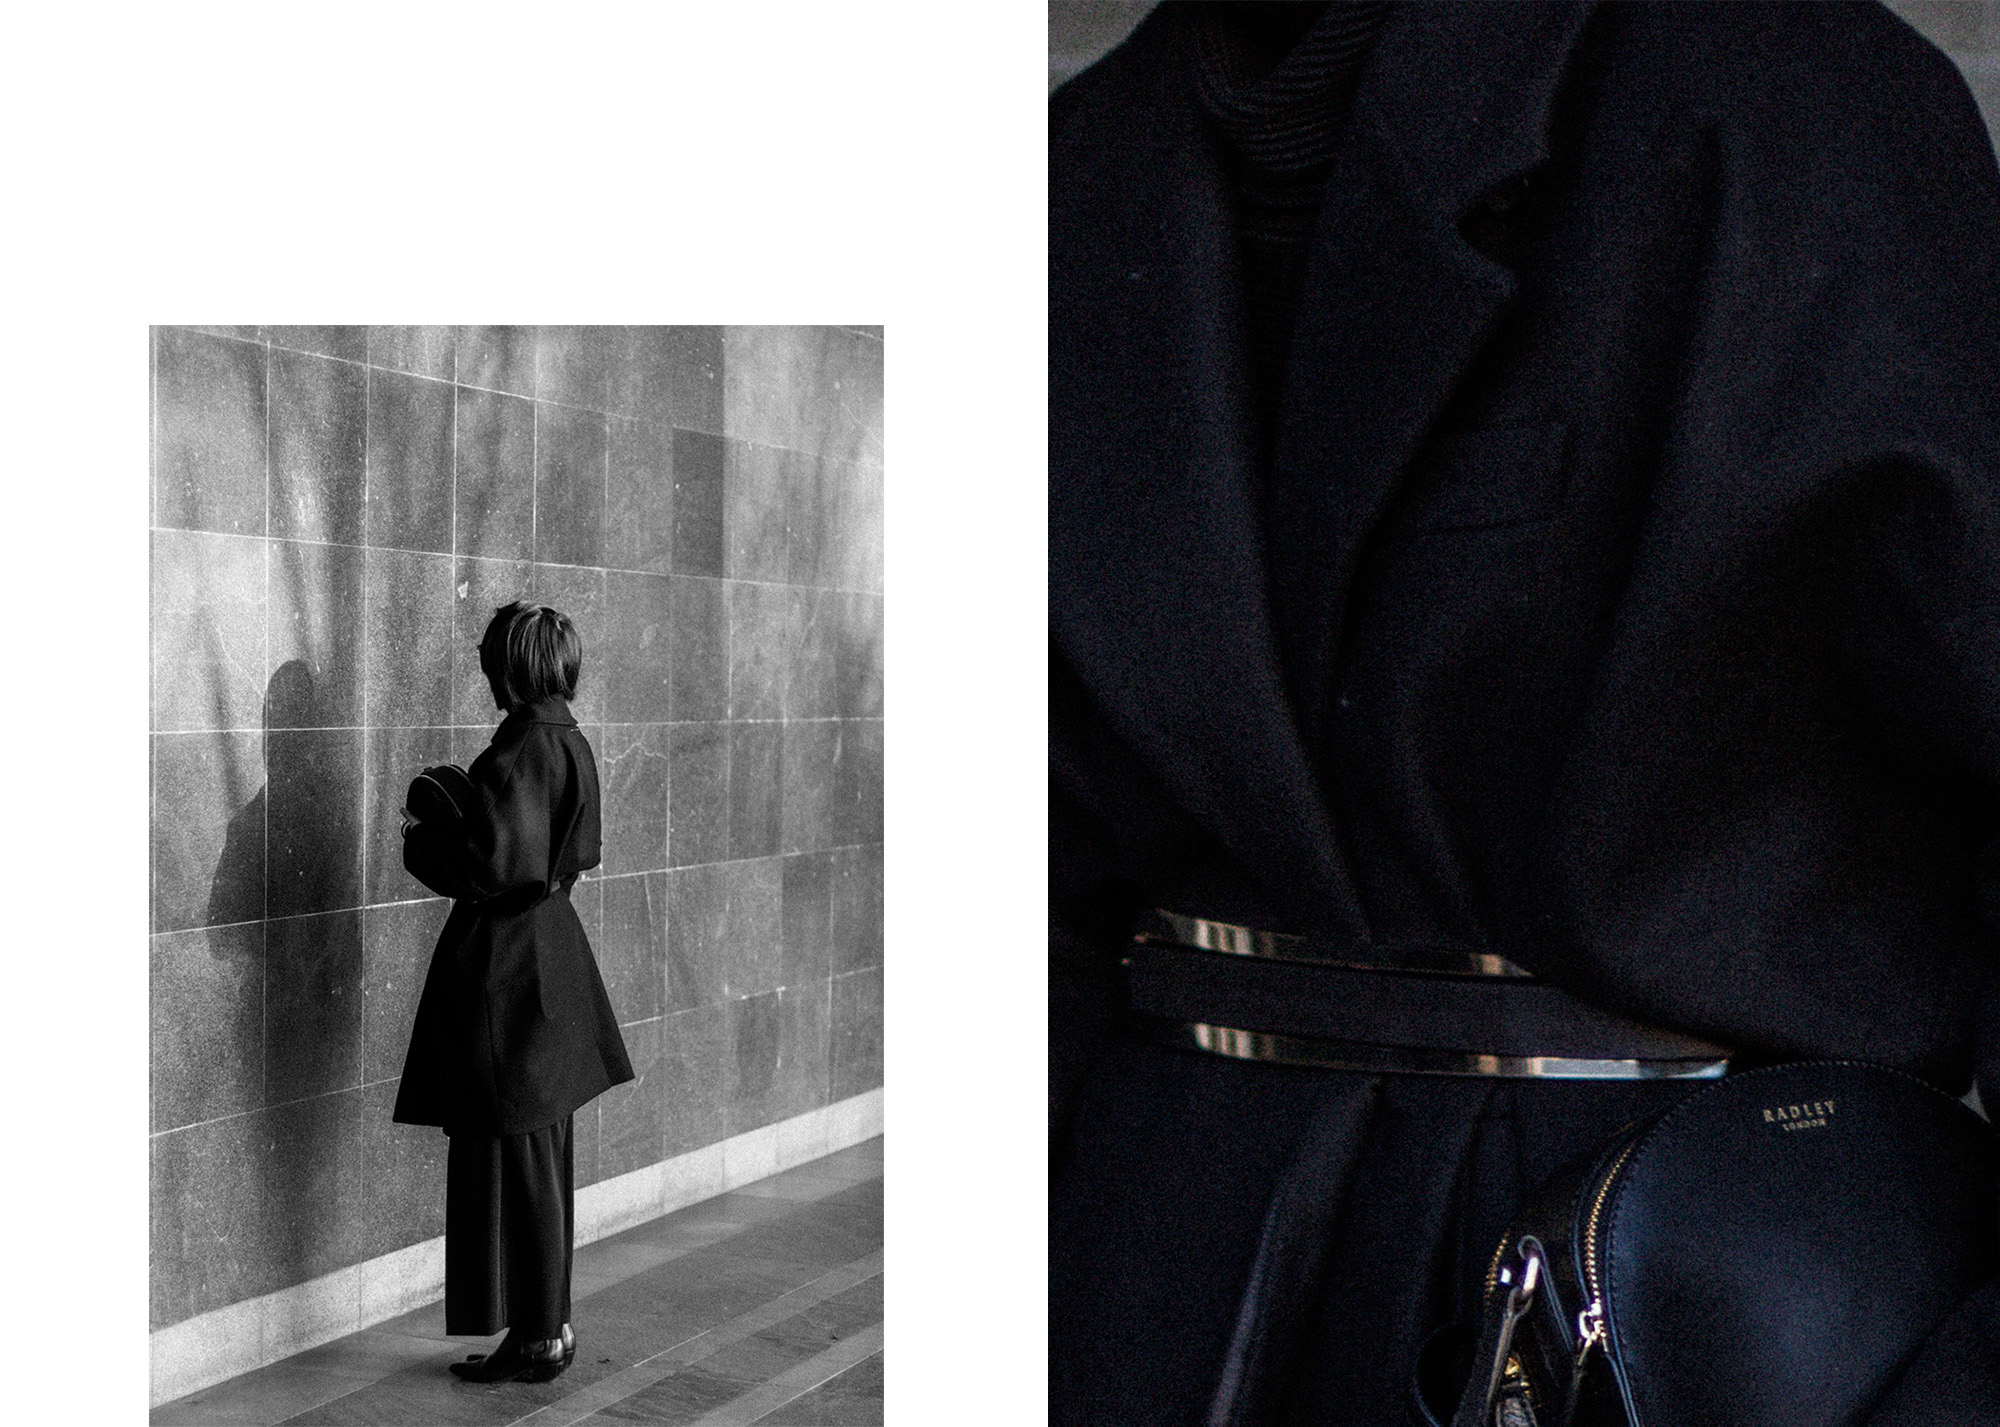 Maison Martin Margiela Coat & Belt, Radley Halfmoon Bag / All Black Everything - IheartAlice.com by Alice M. Huynh